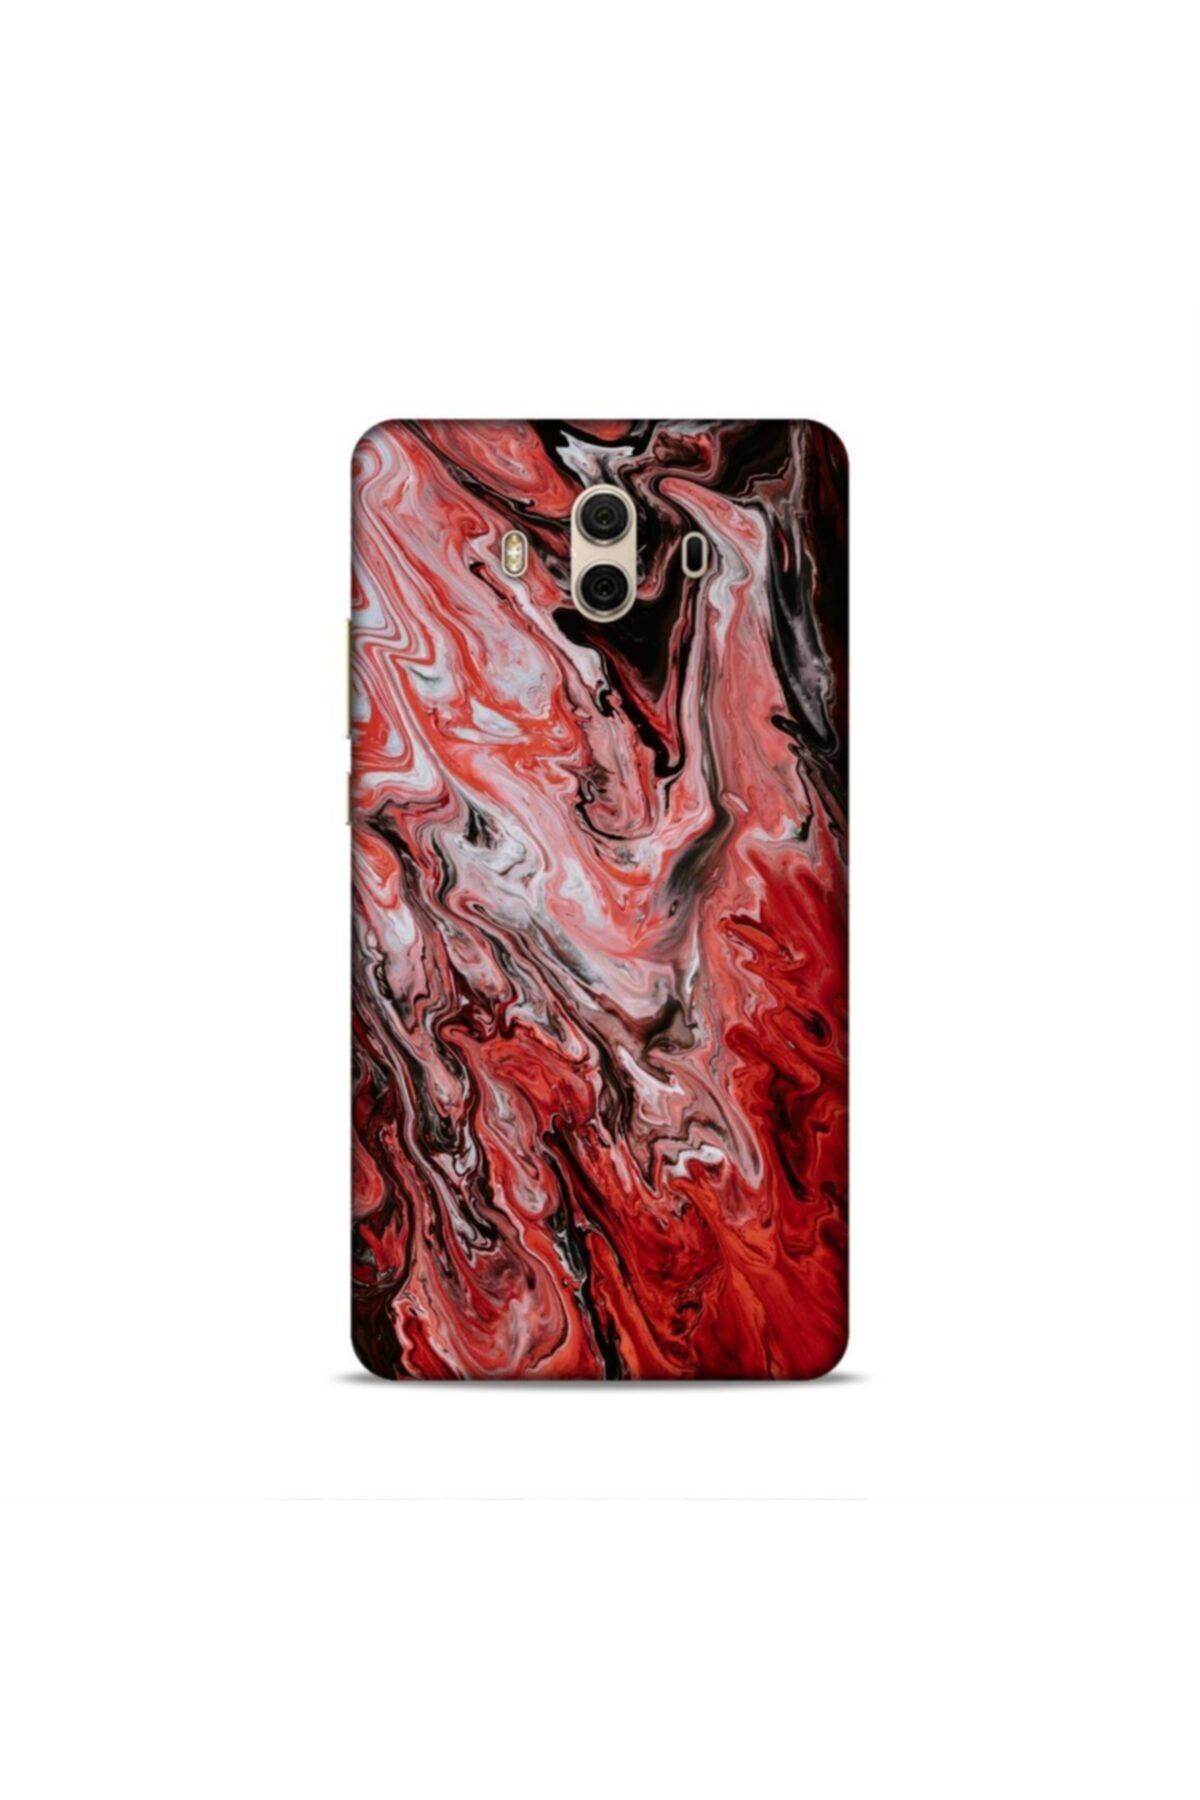 Pickcase Huawei Mate 10 Kılıf Desenli Arka Kapak Kızıl Tablo